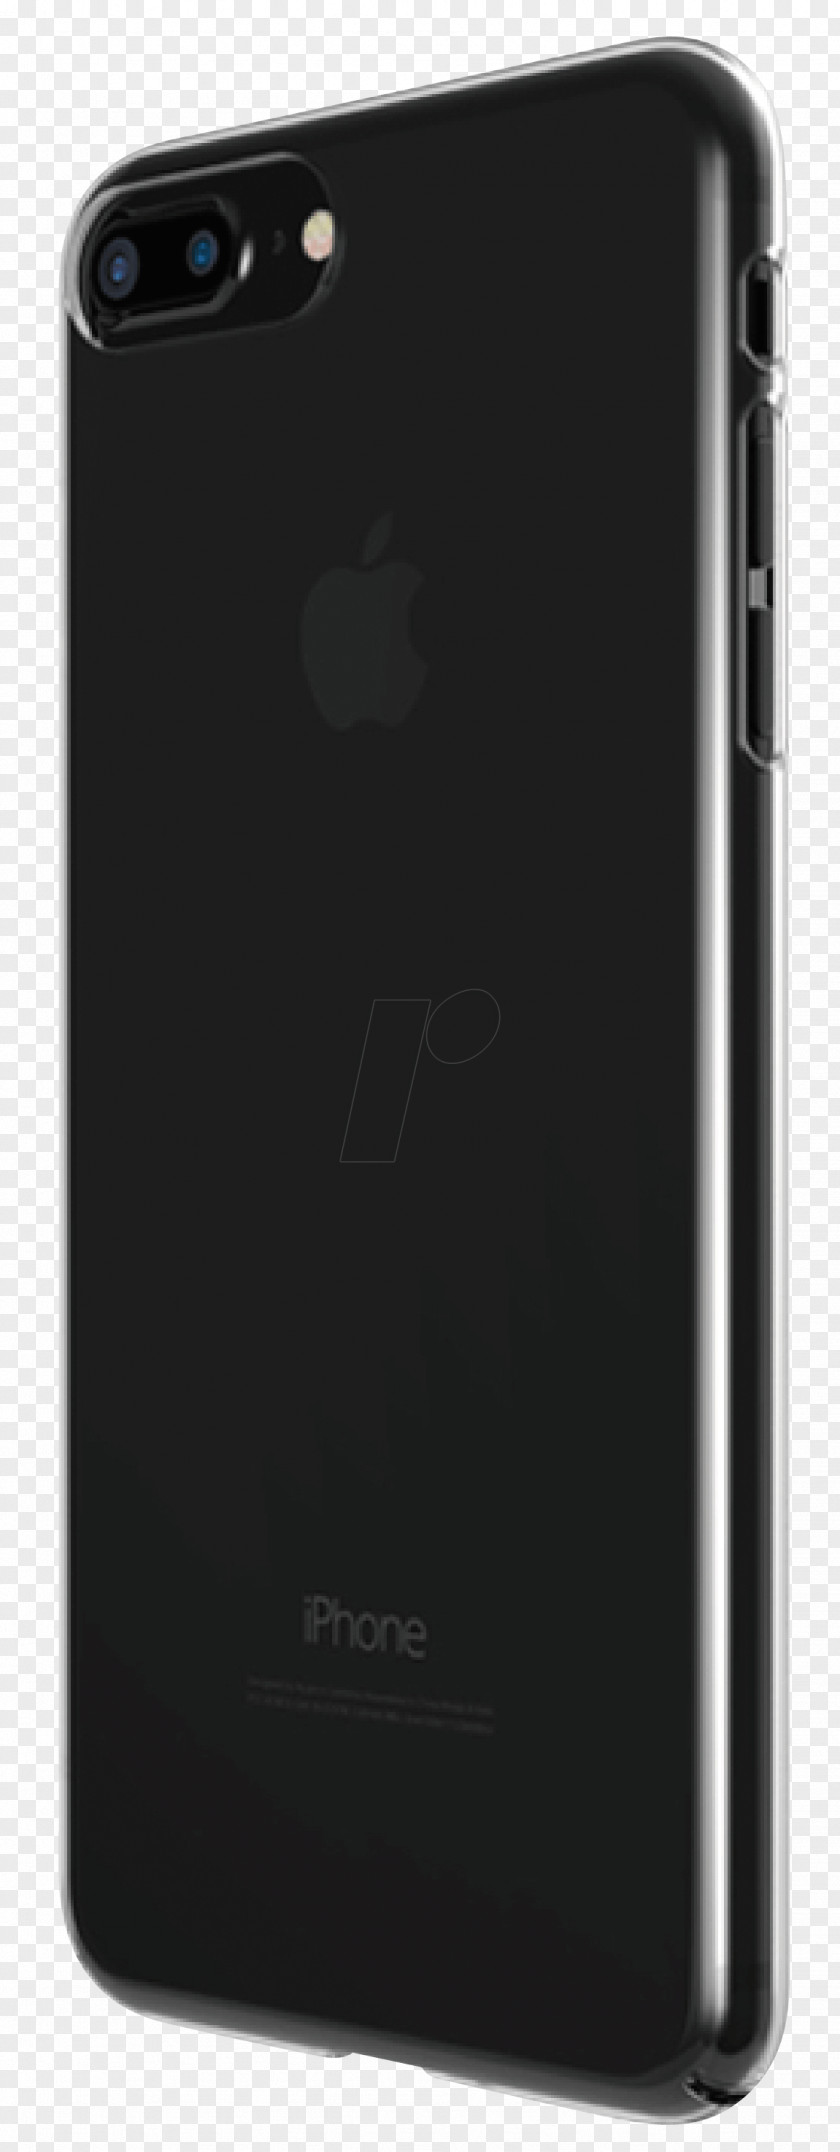 JB Huawei P8 Lite (2017) P9 Telephone 华为 Air Purifiers PNG